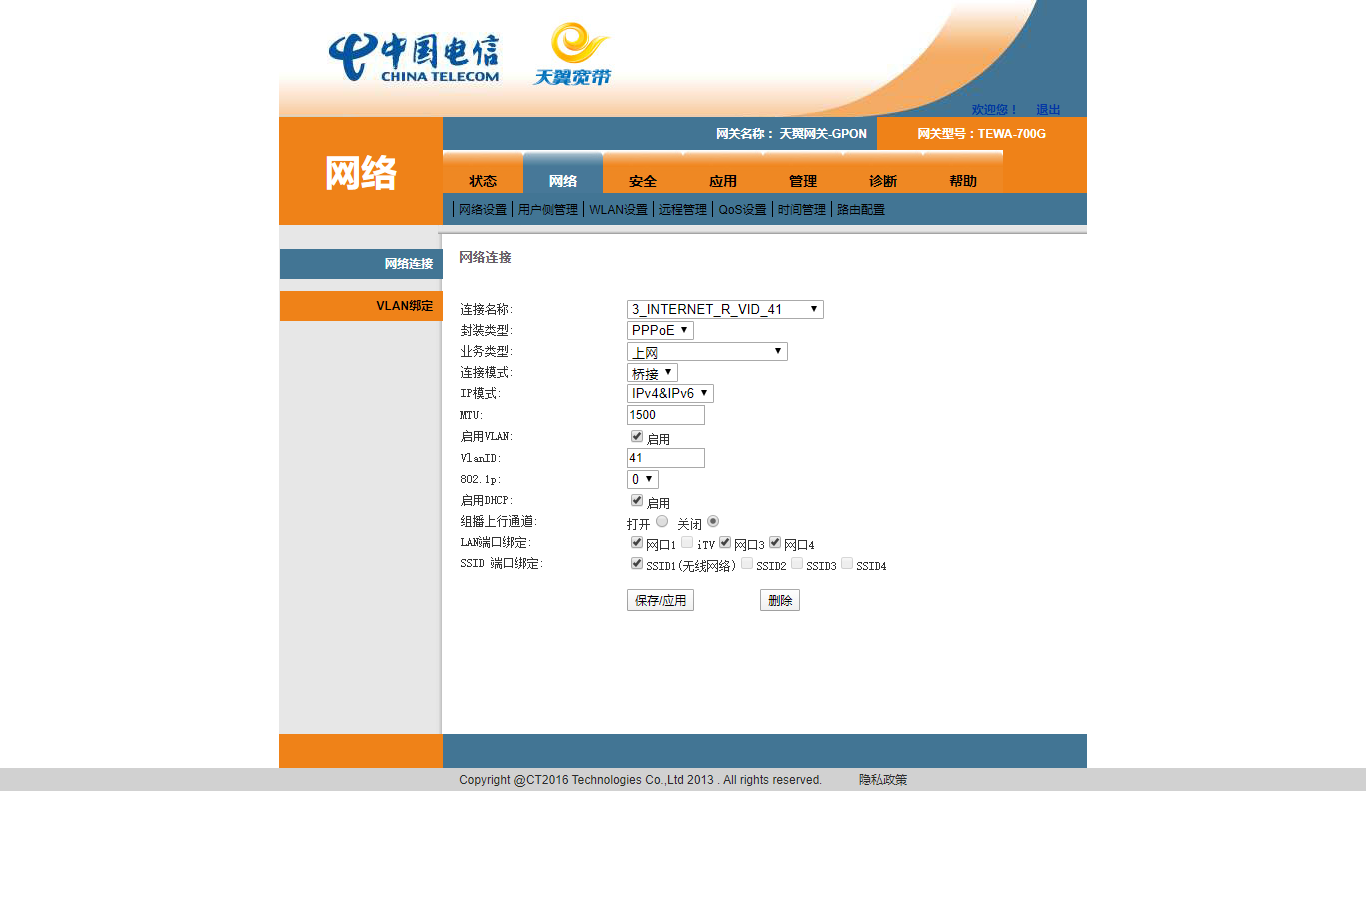 FireShot Capture 016 - 中国电信 - 192.168.1.1.png